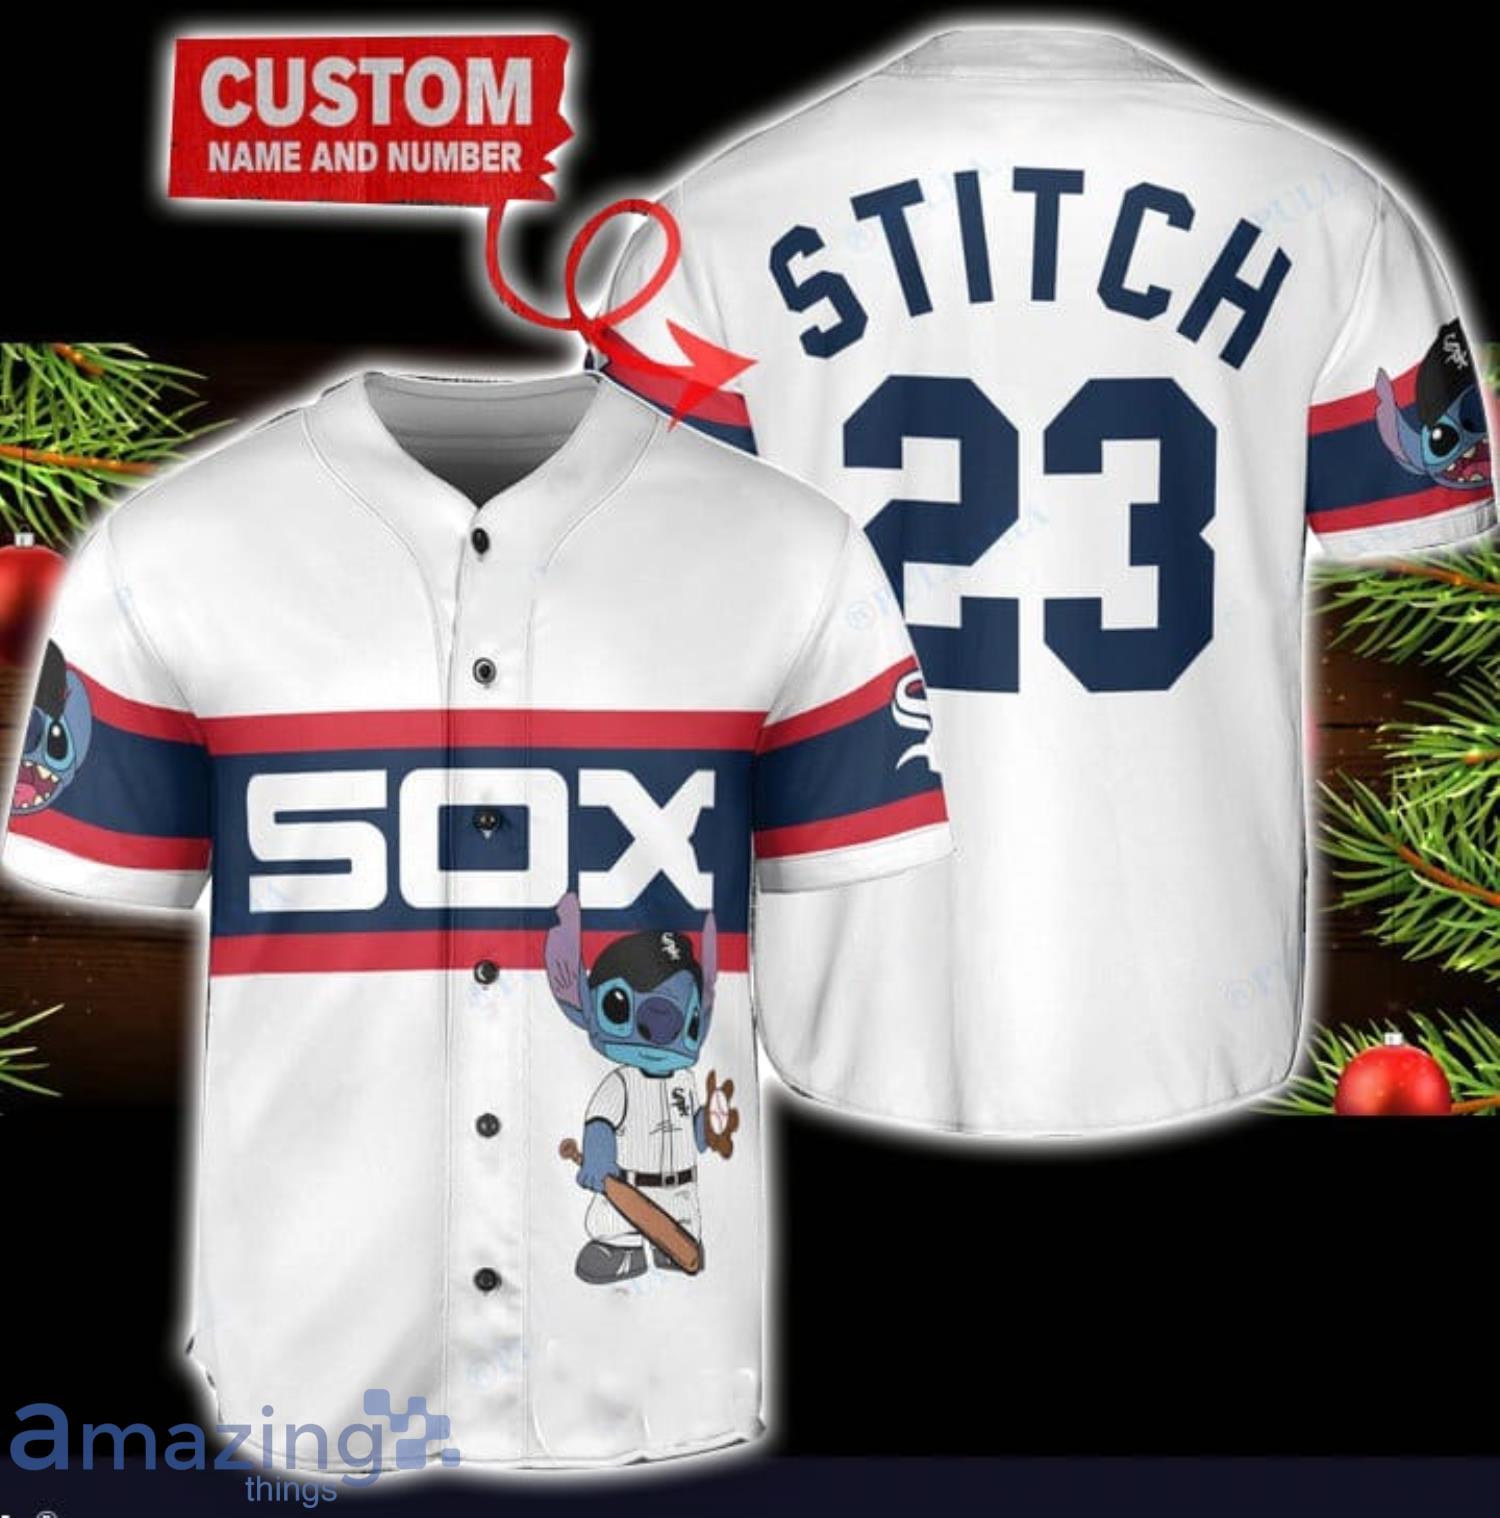 Personalized Chicago White Sox custom Baseball jersey Shirt